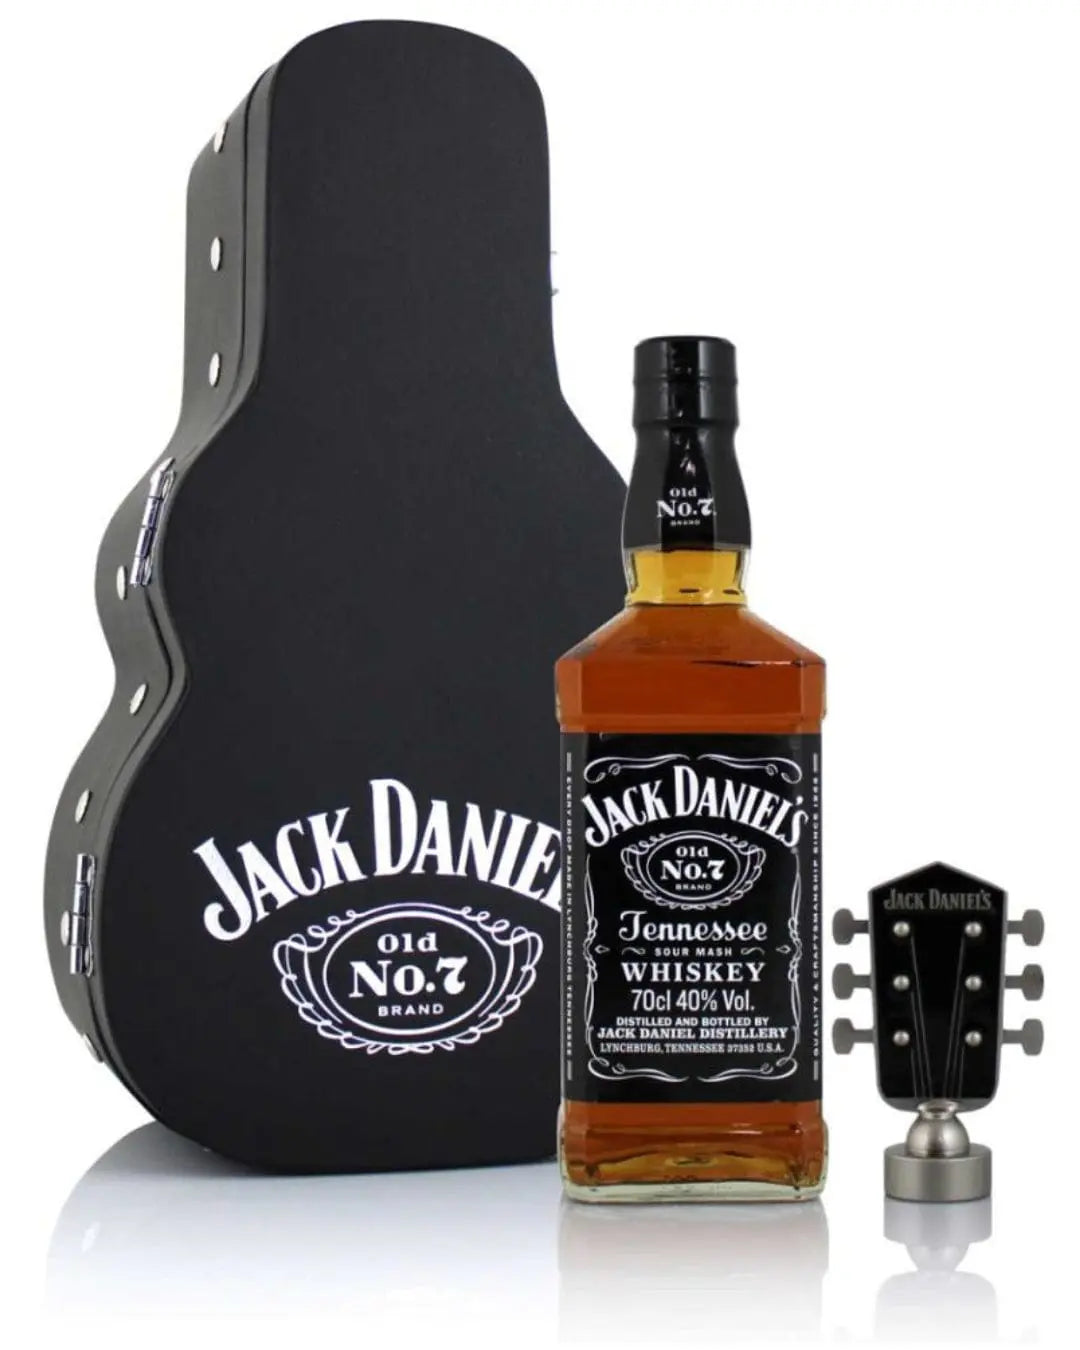 Jack Daniel's Old No 7 Guitar Case Whiskey, 70 cl Whisky